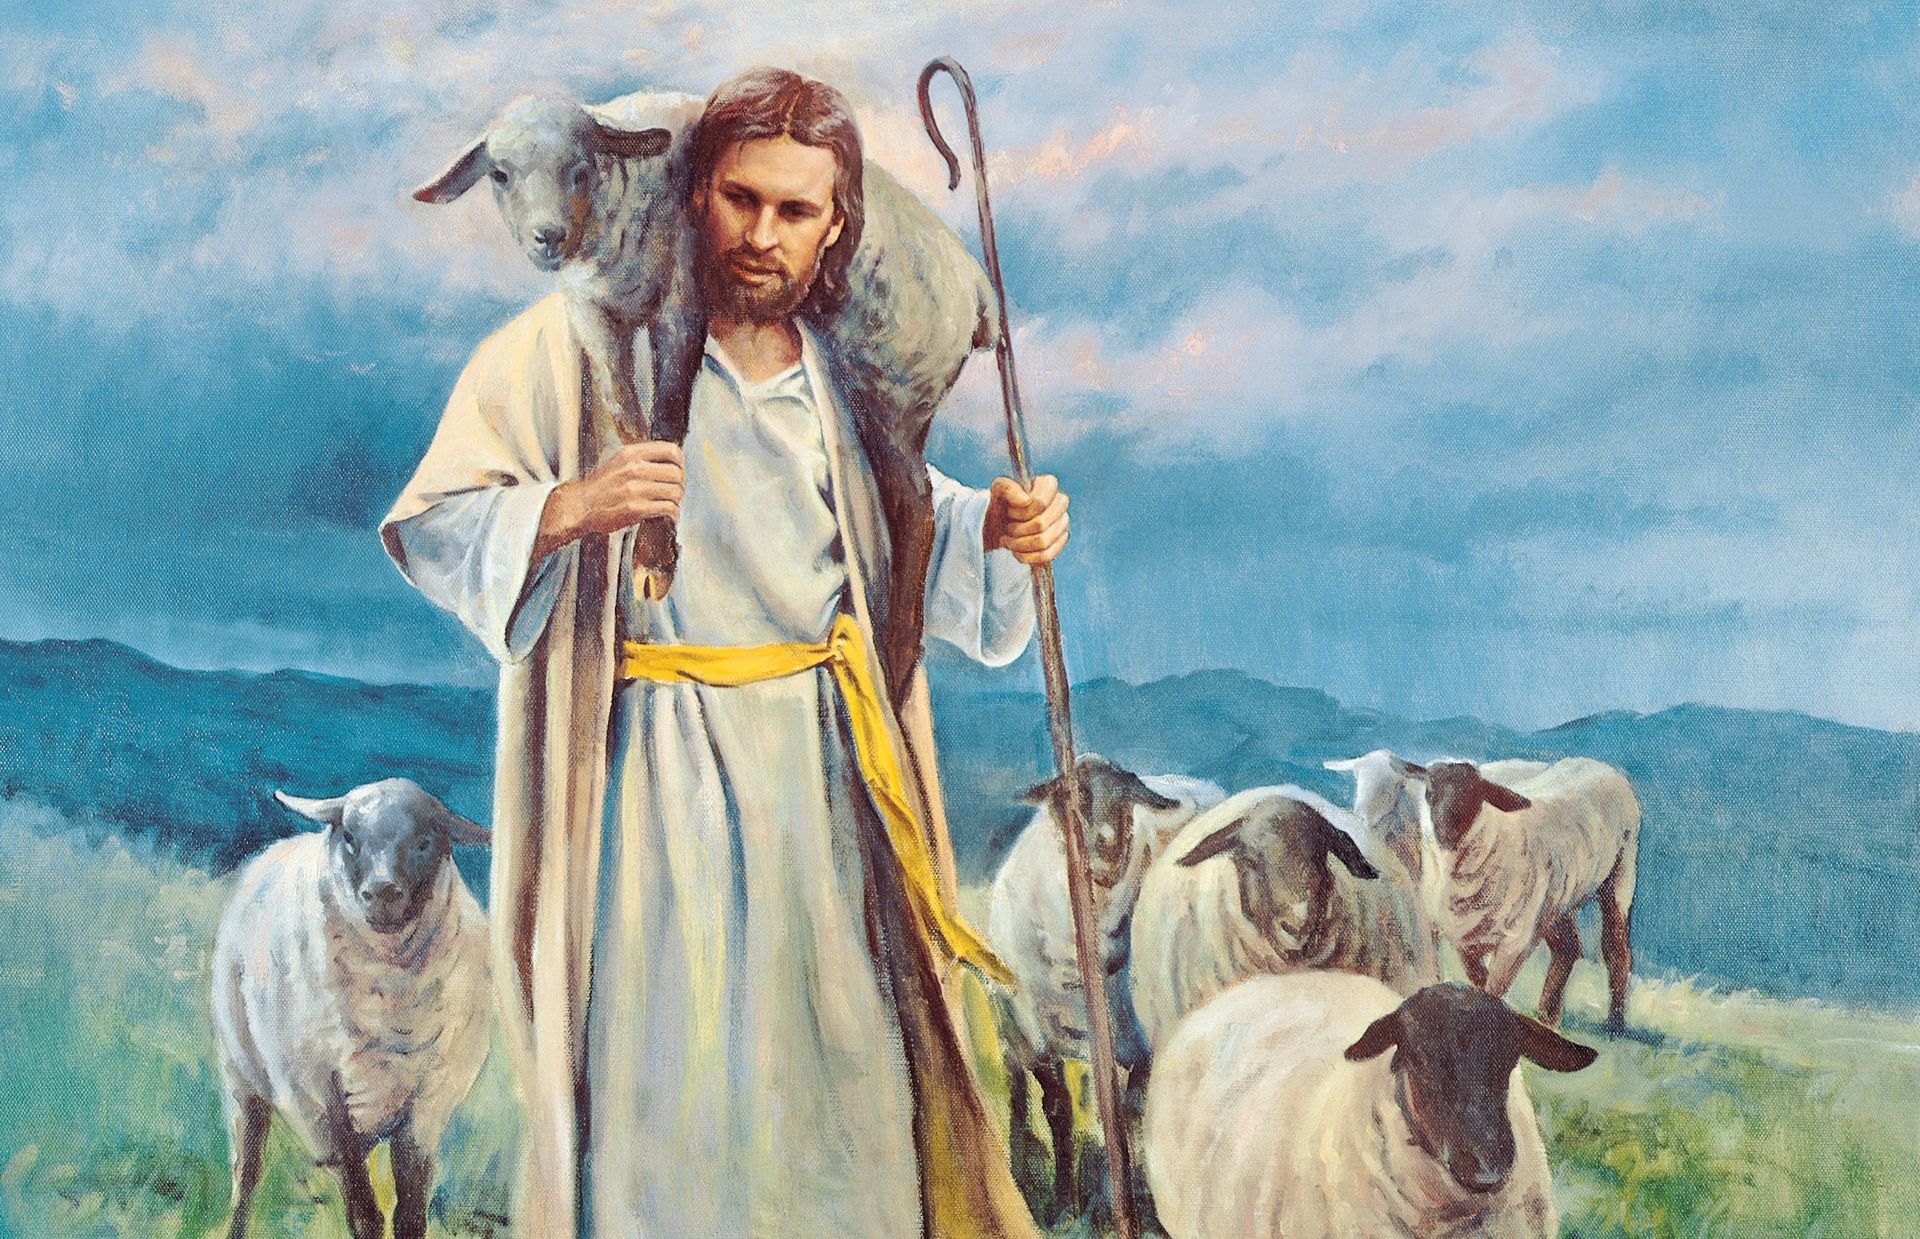 The Good Shepherd, by Del Parson